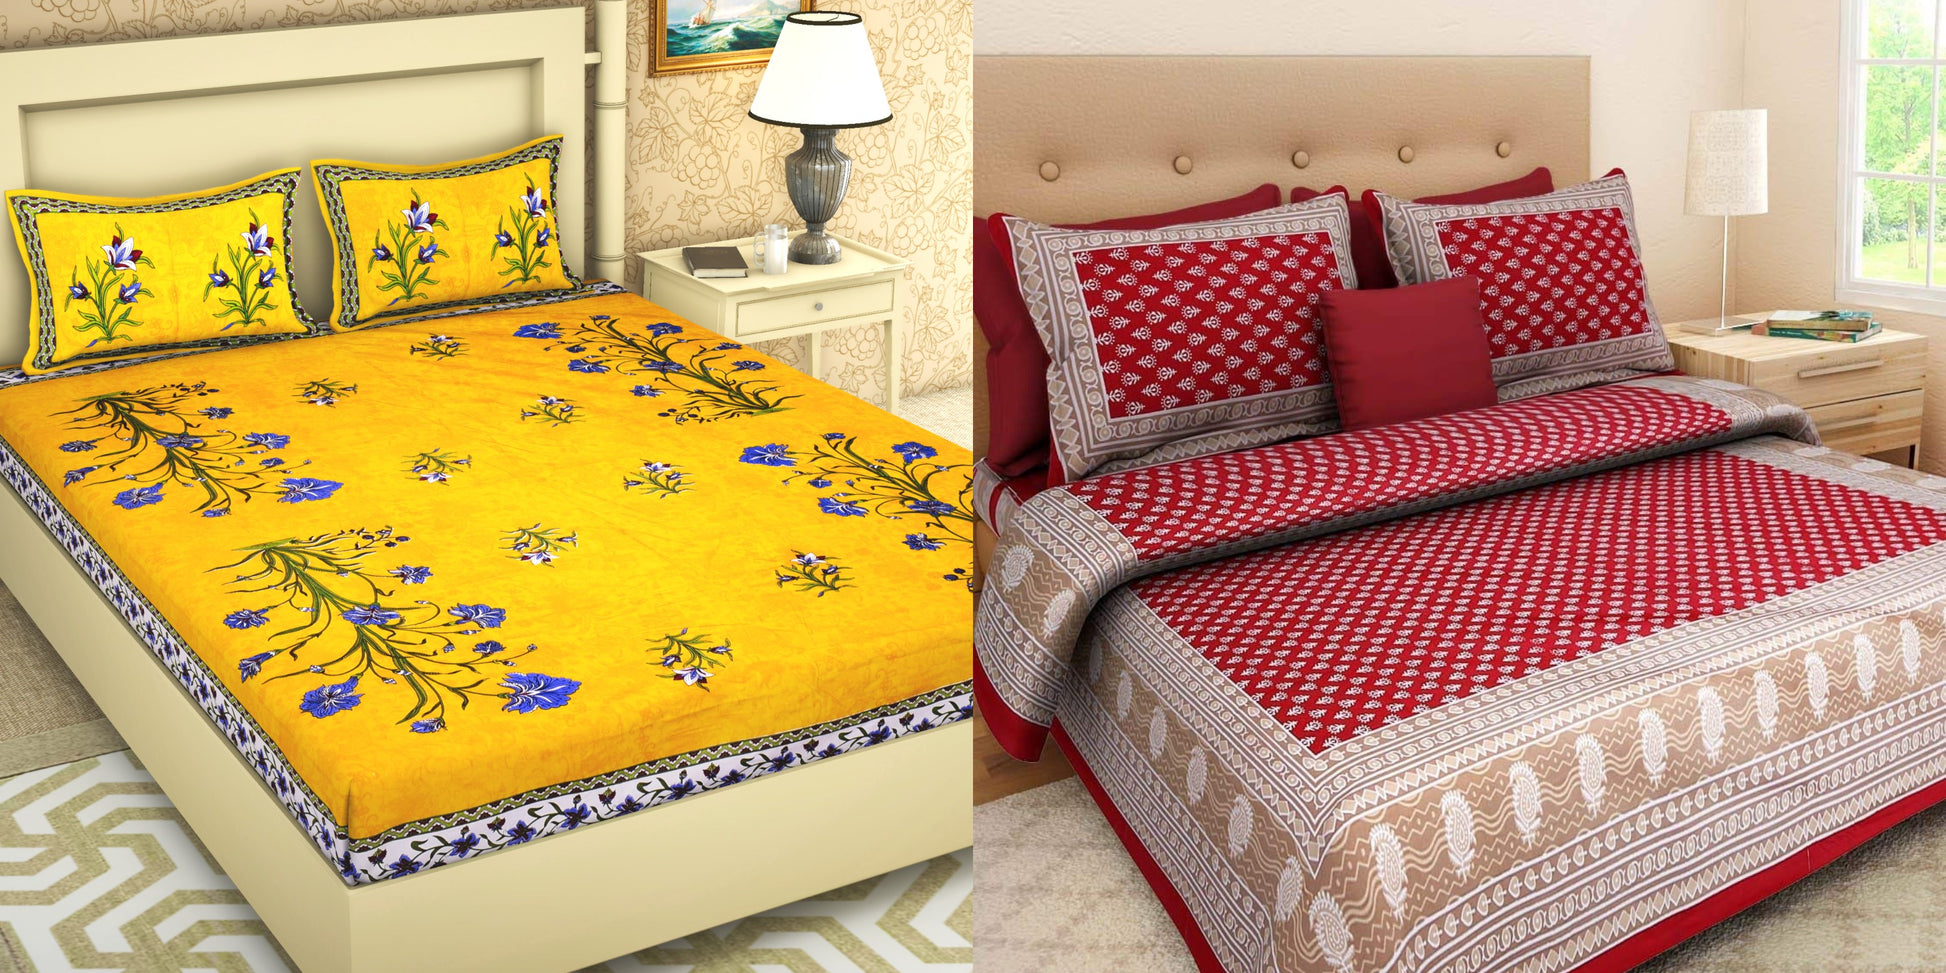 Jaipuri 100% Cotton Bedsheet 280 -TC Cotton Double 2 Bedsheet With 4 Pillow Cover - Bedsheet Combo Pack www.jaipurtohome.com